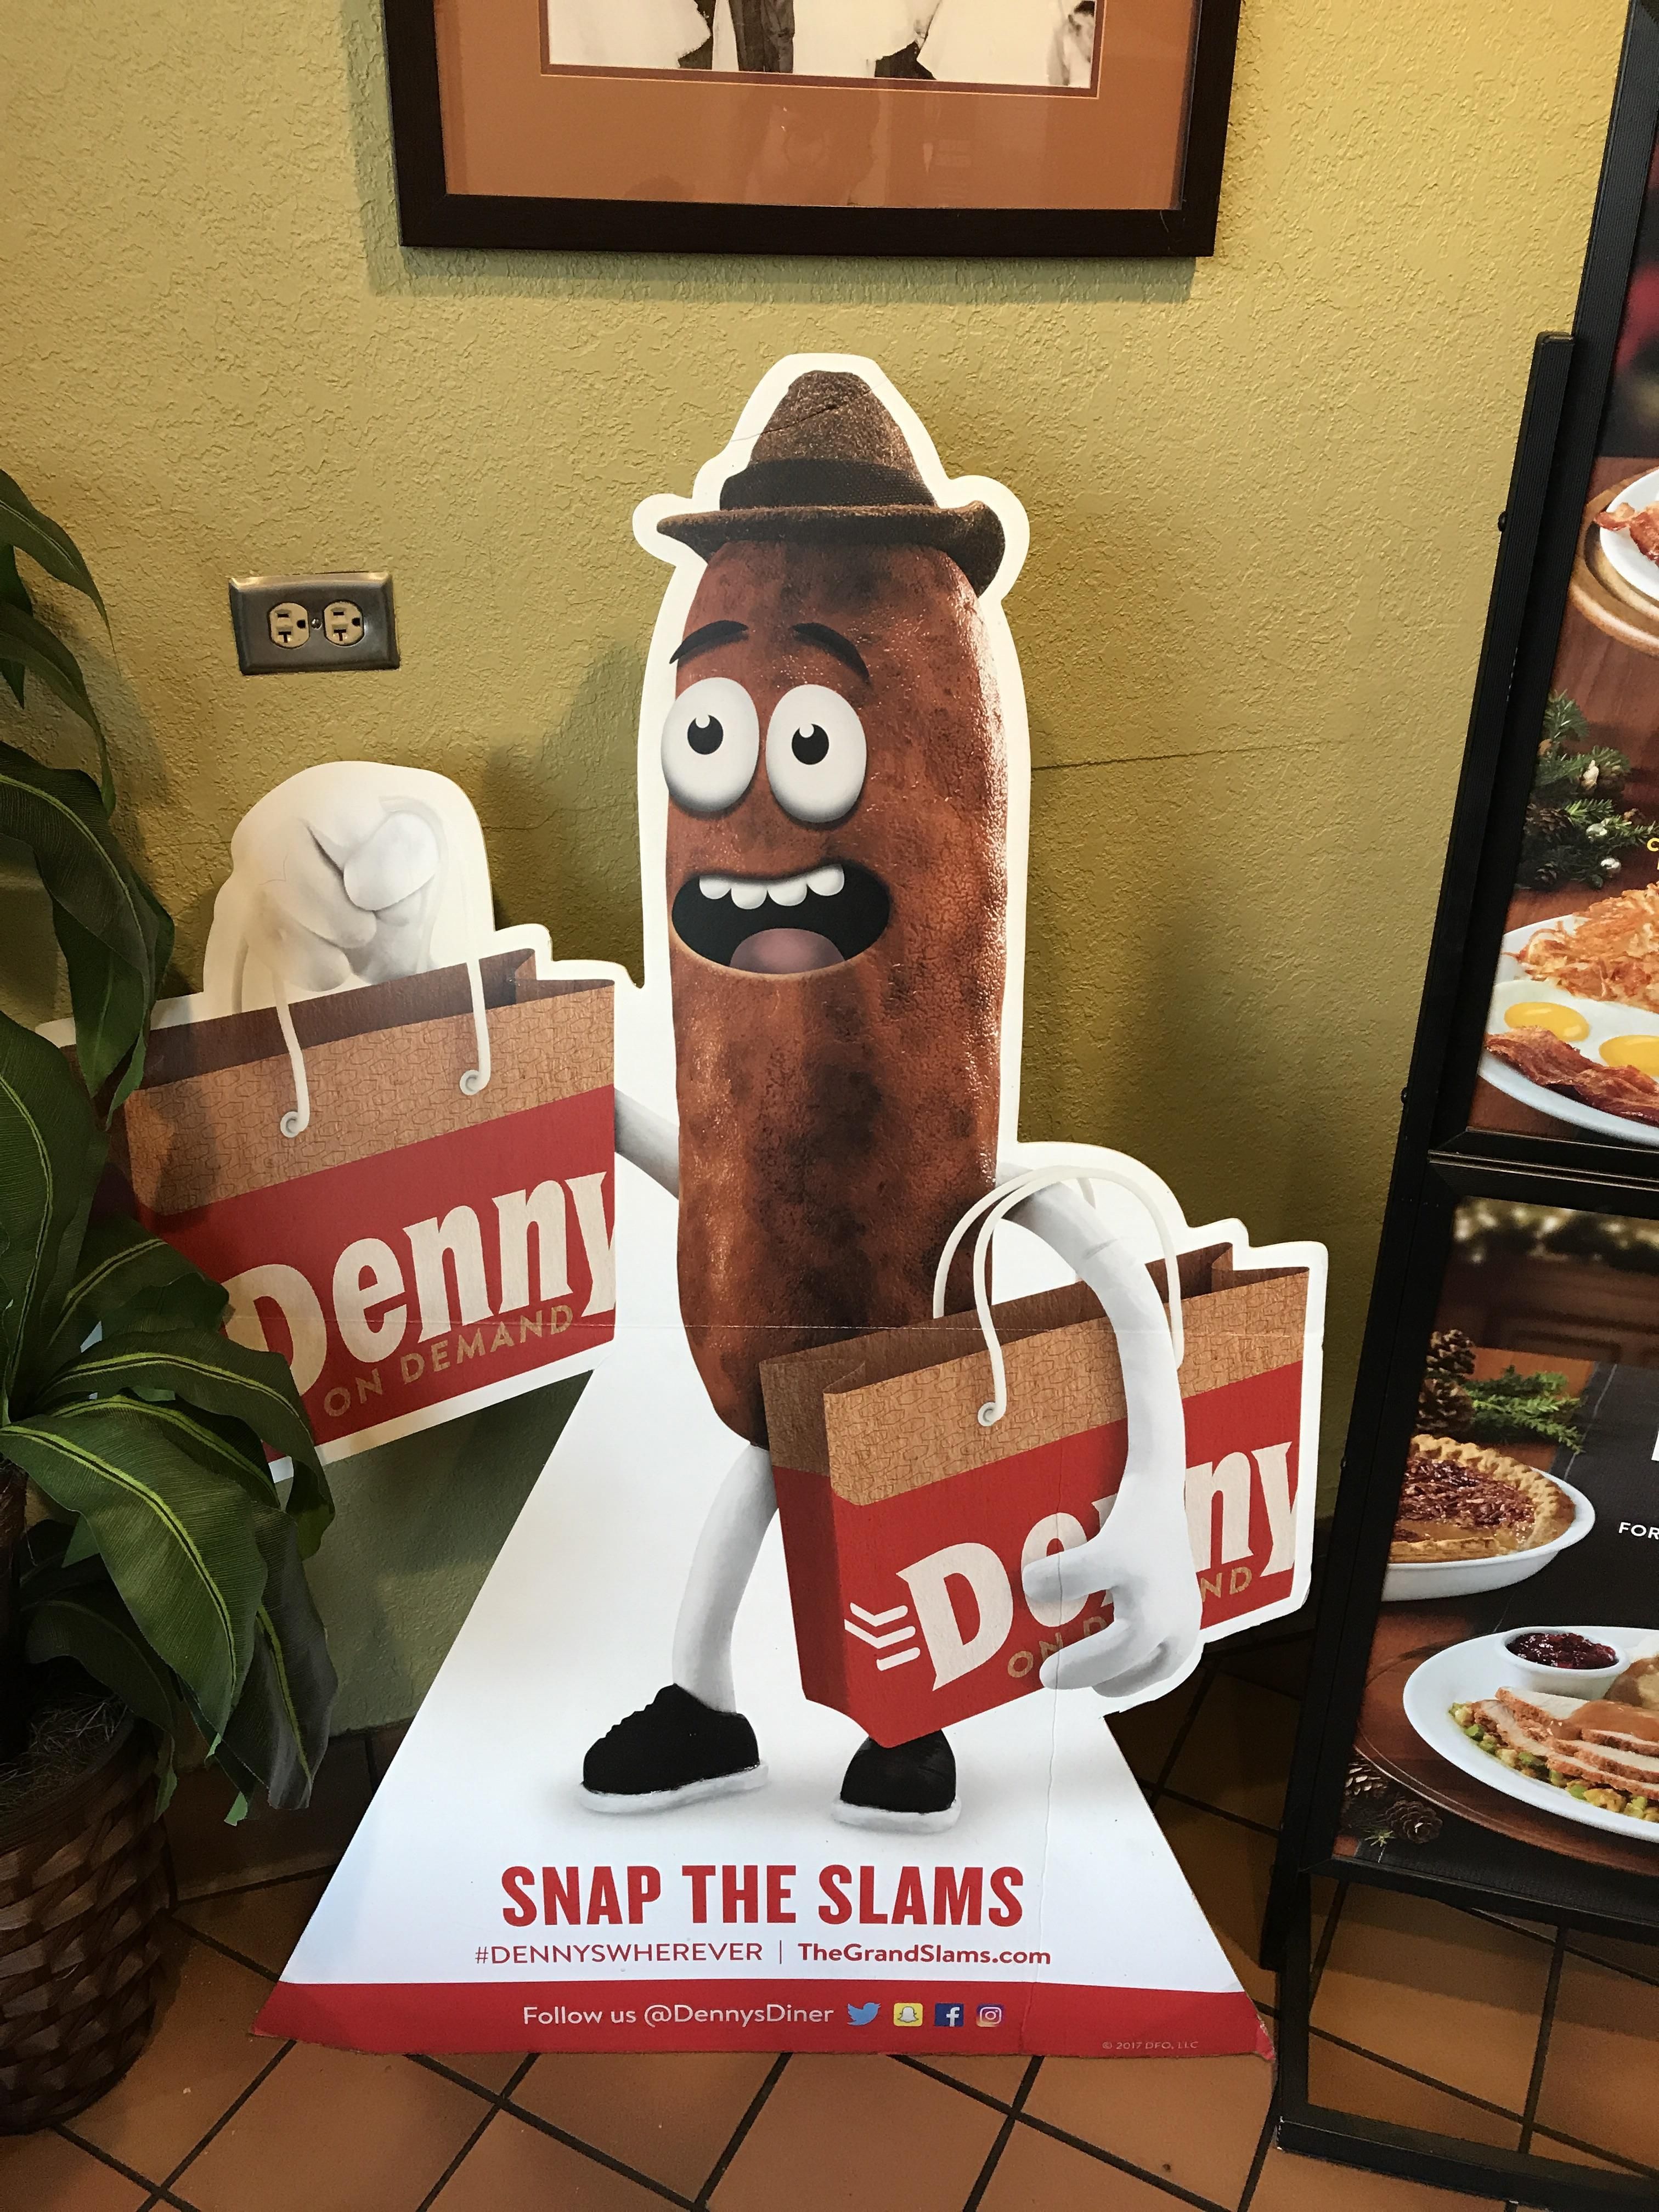 The new Denny's mascot looks like a turd.